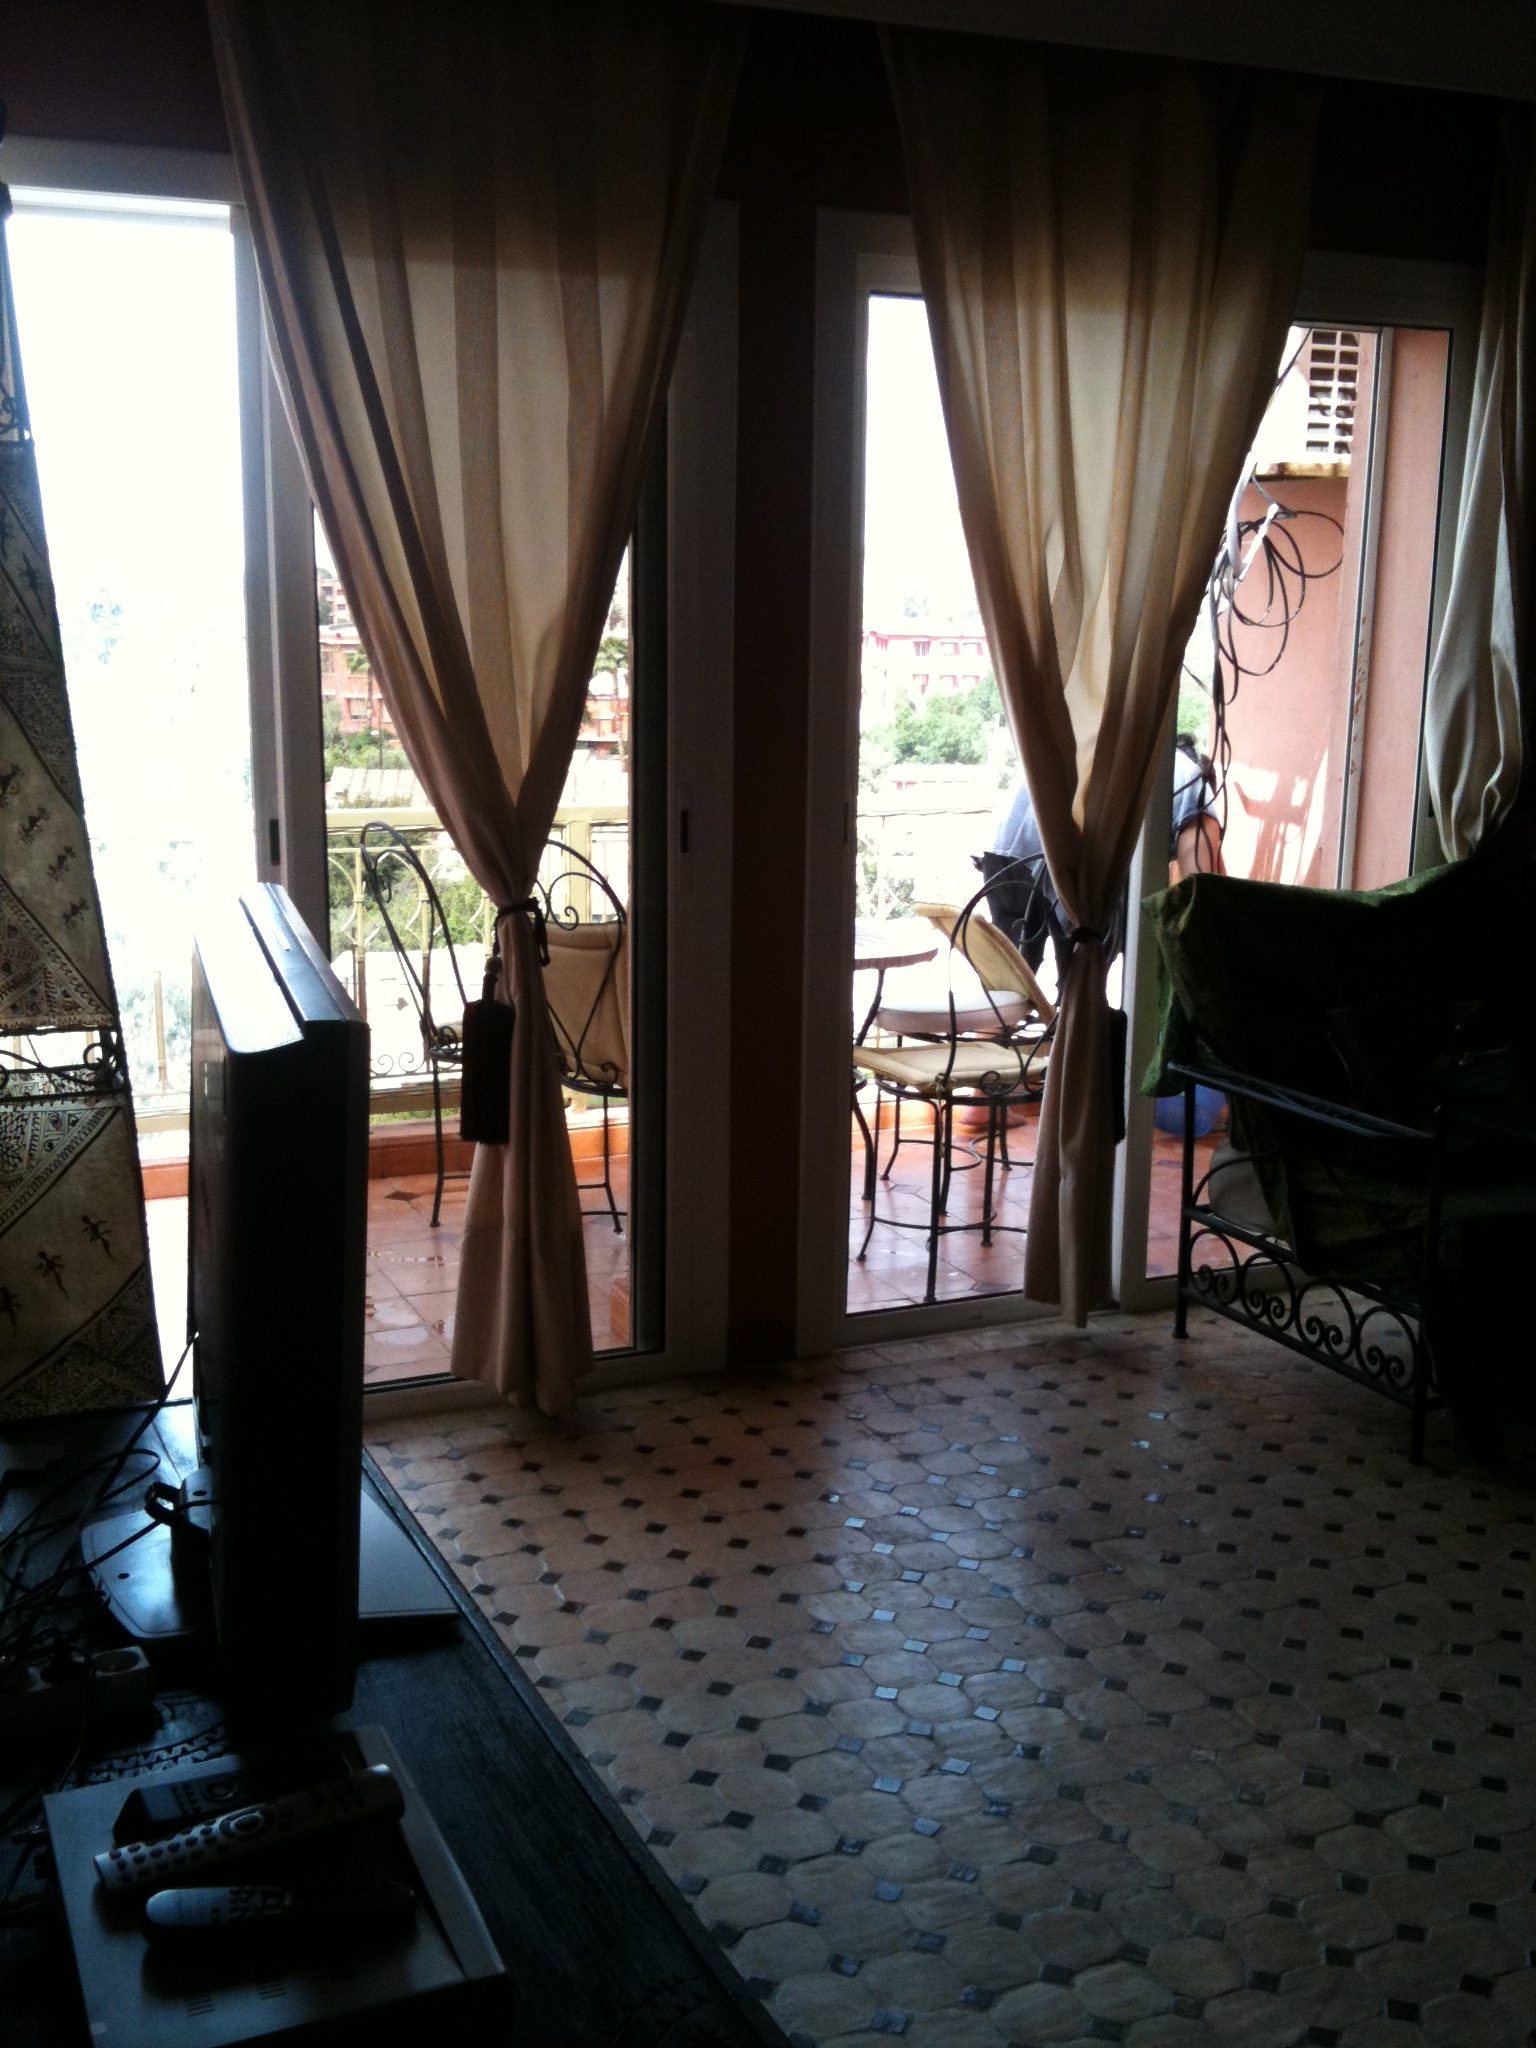 Location appartement Marrakech